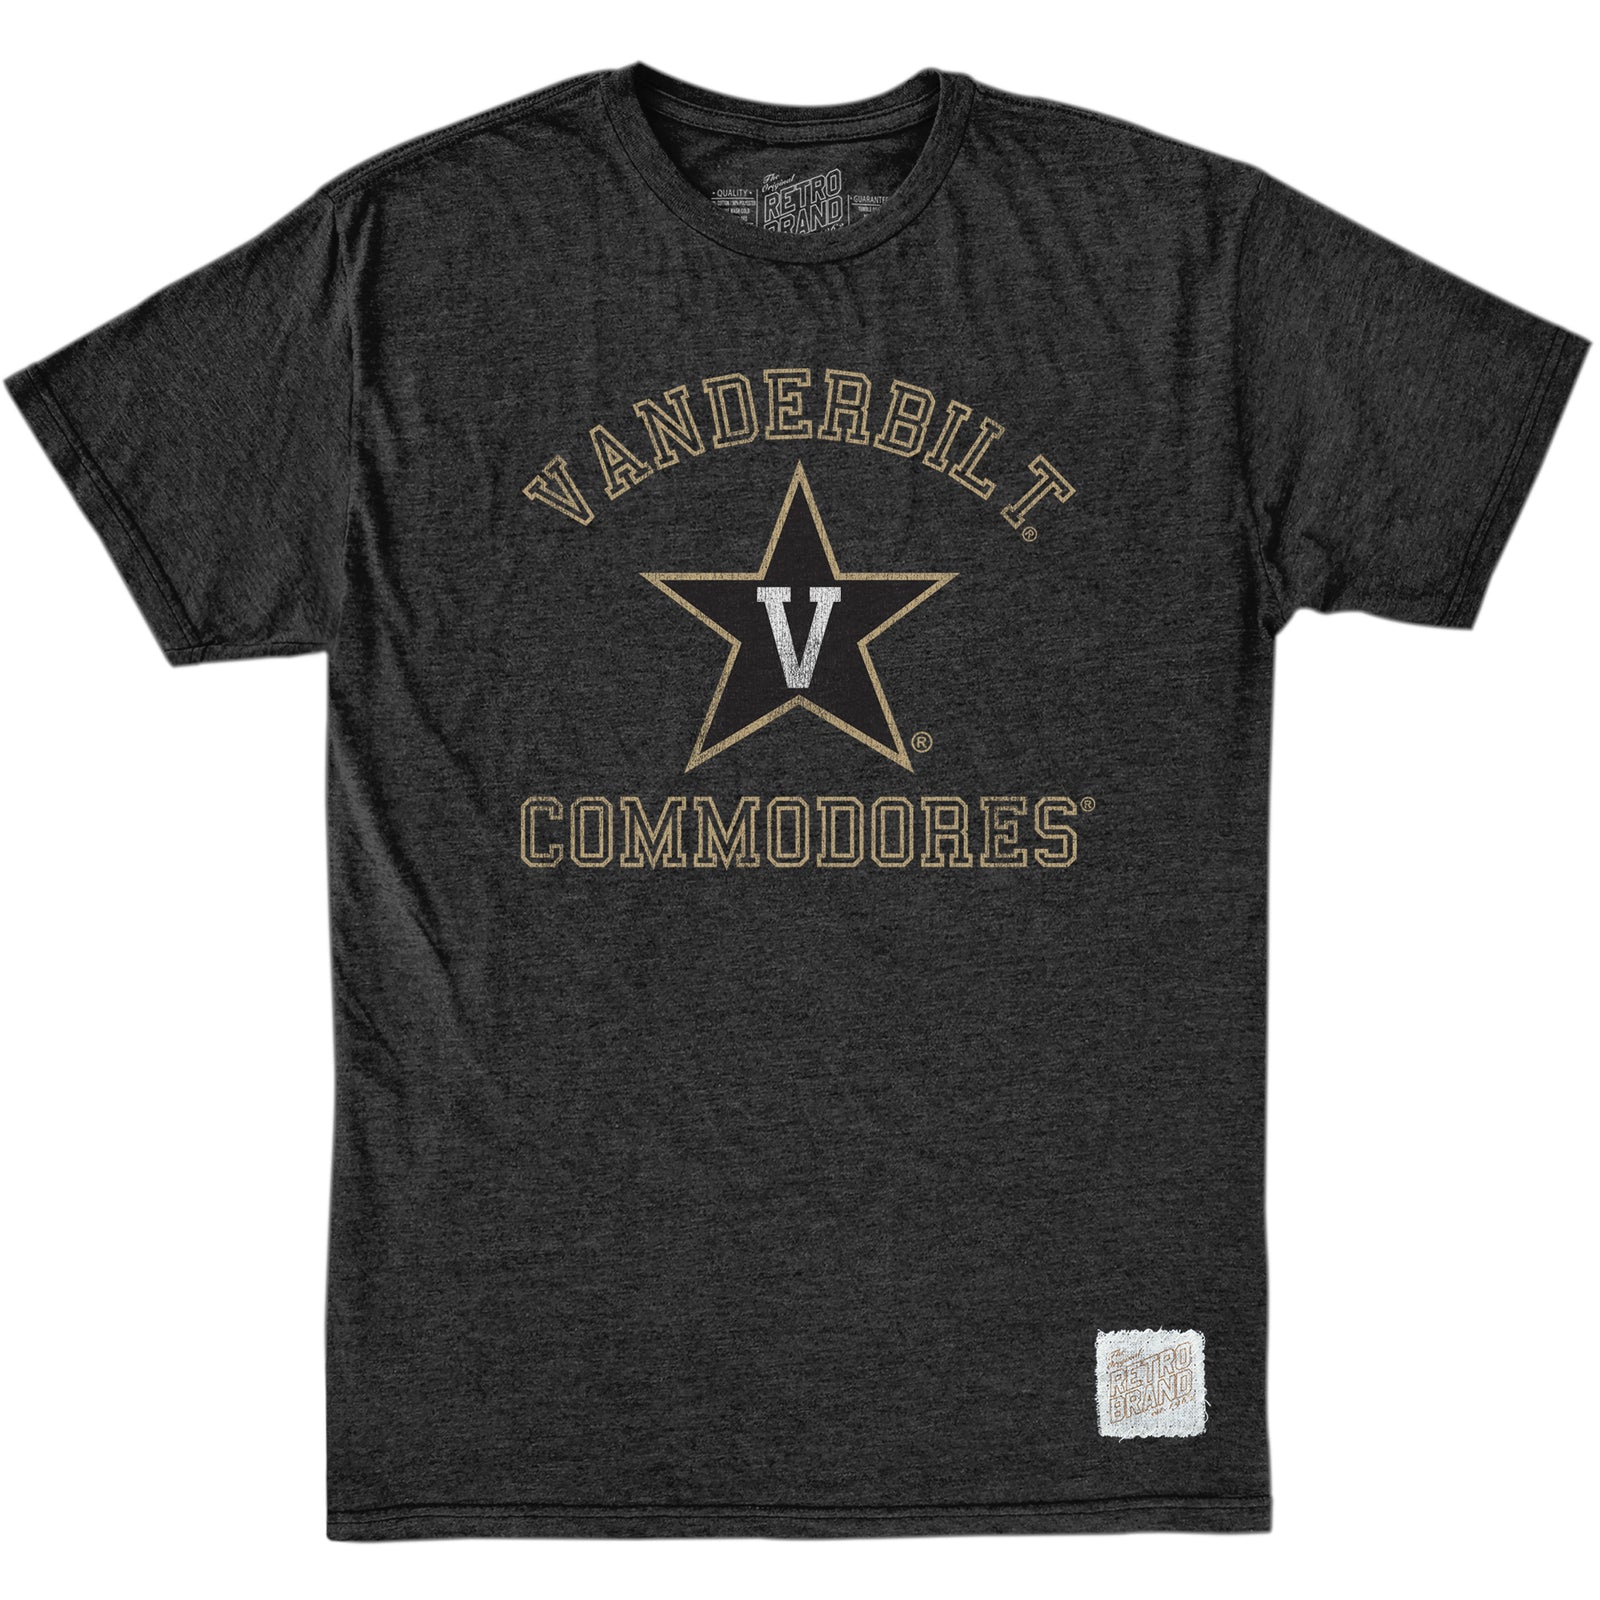 Vanderbilt Commodores 50/50 Blend Tee